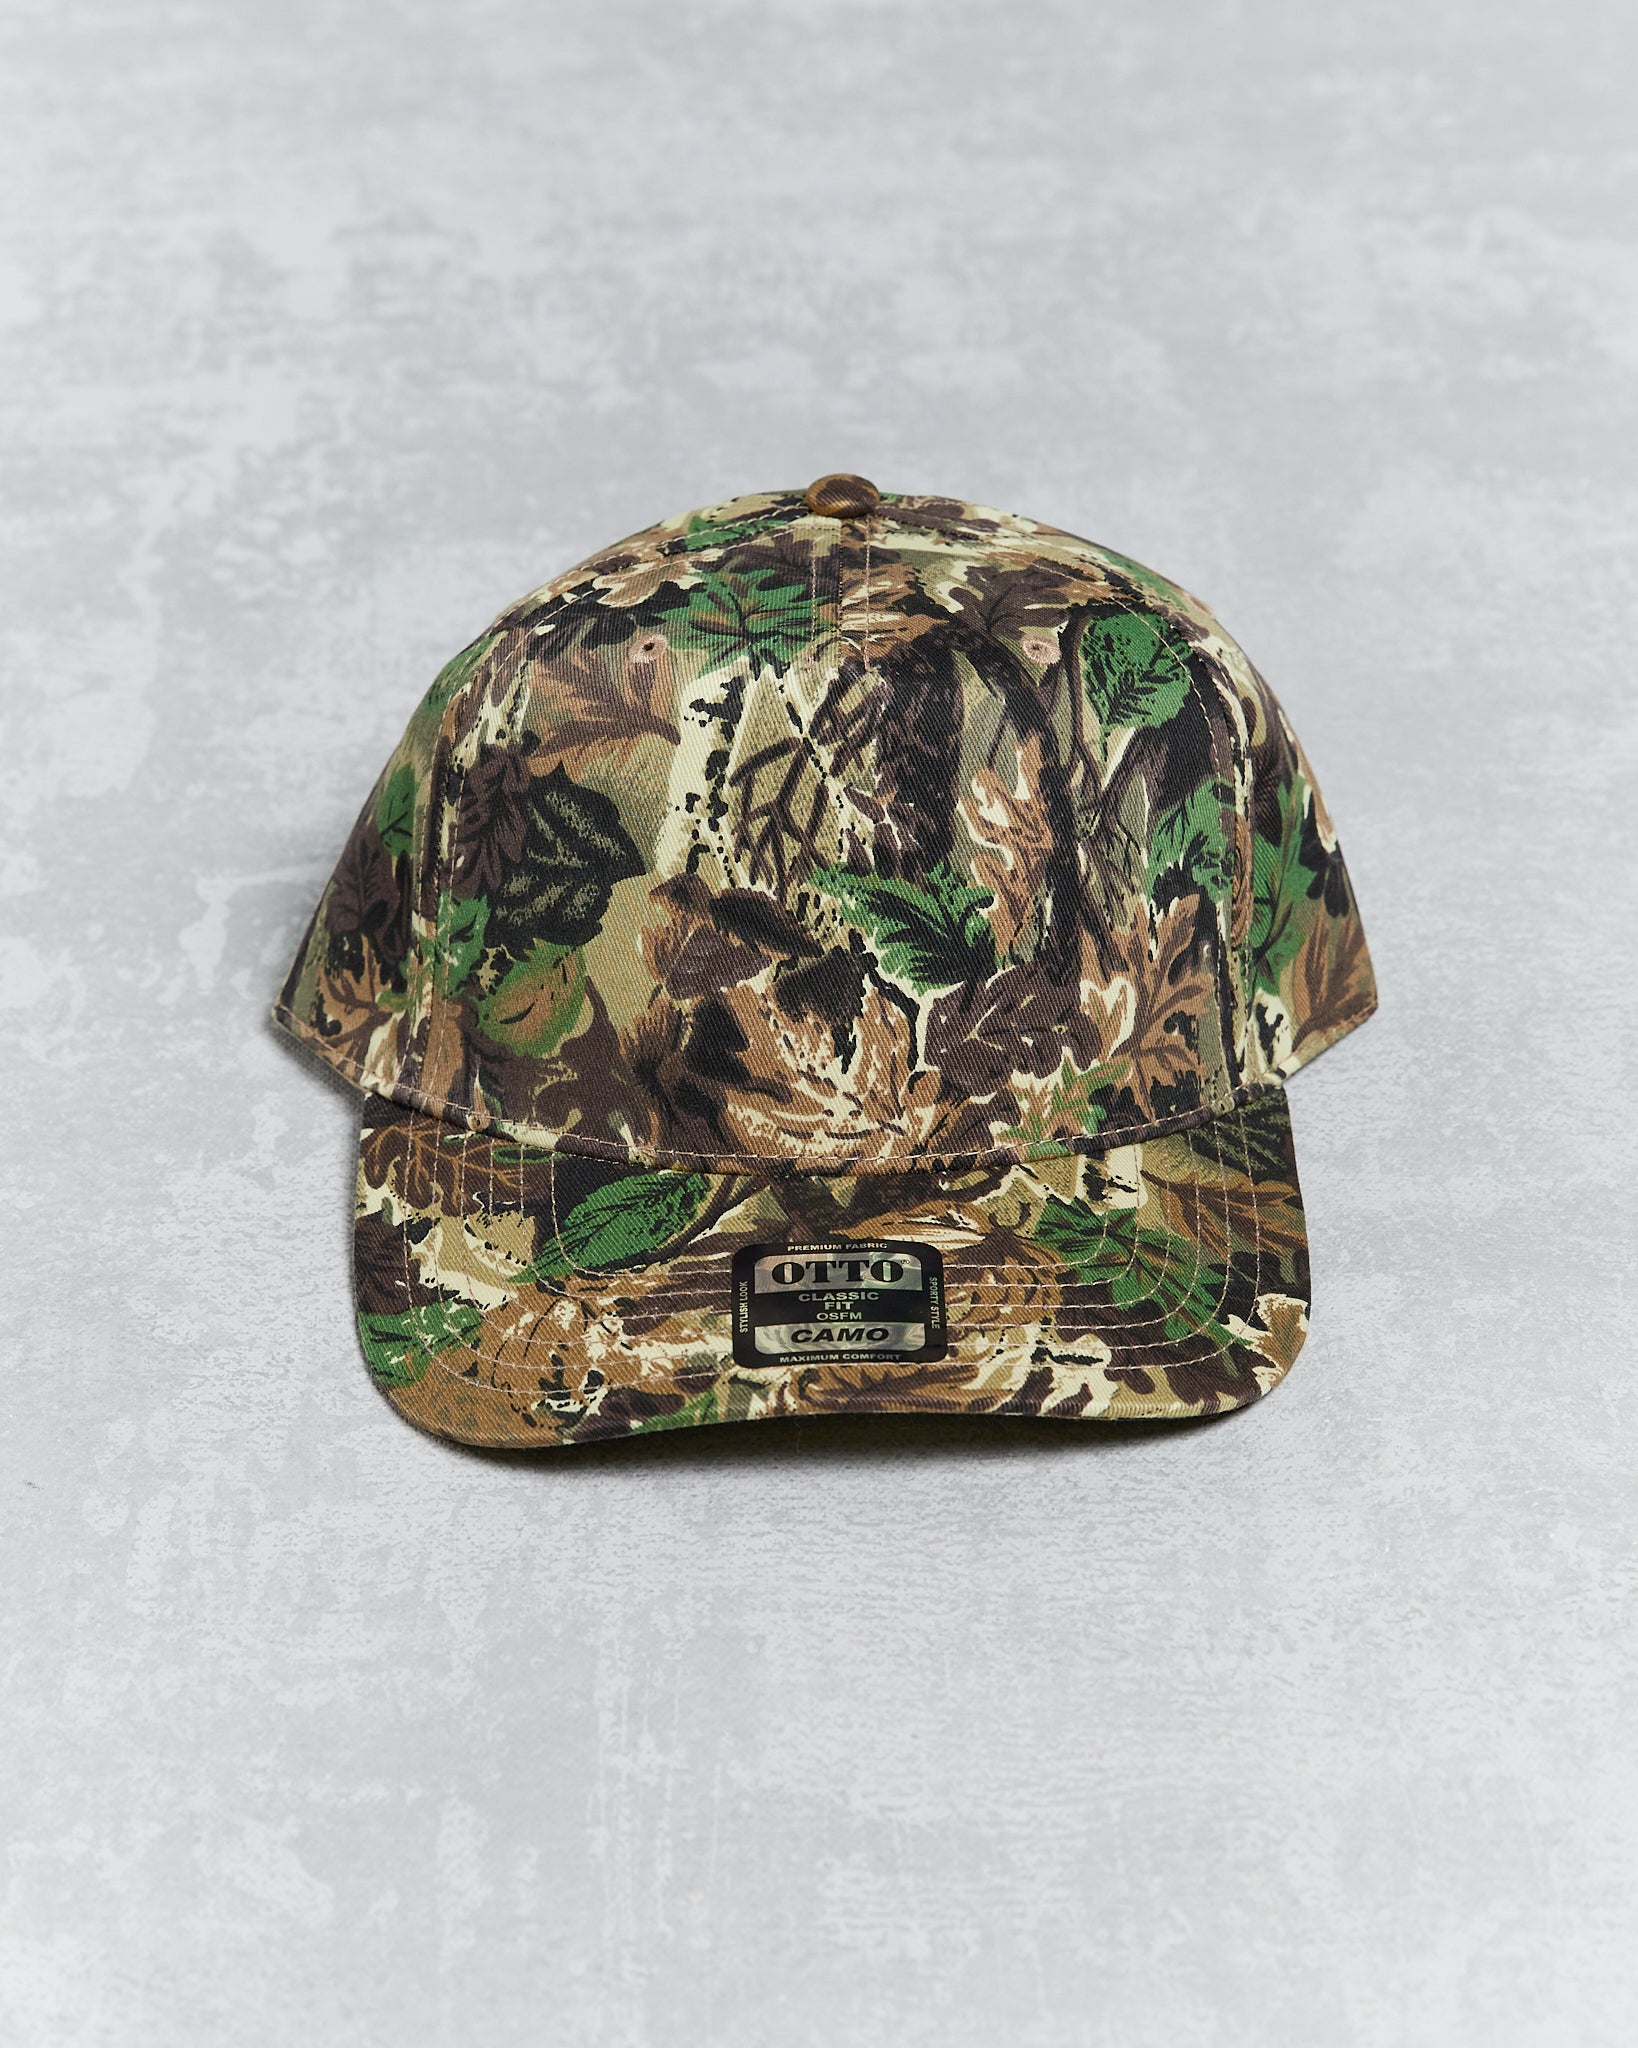 Otto Cap Camouflage tree camo snapback hat 